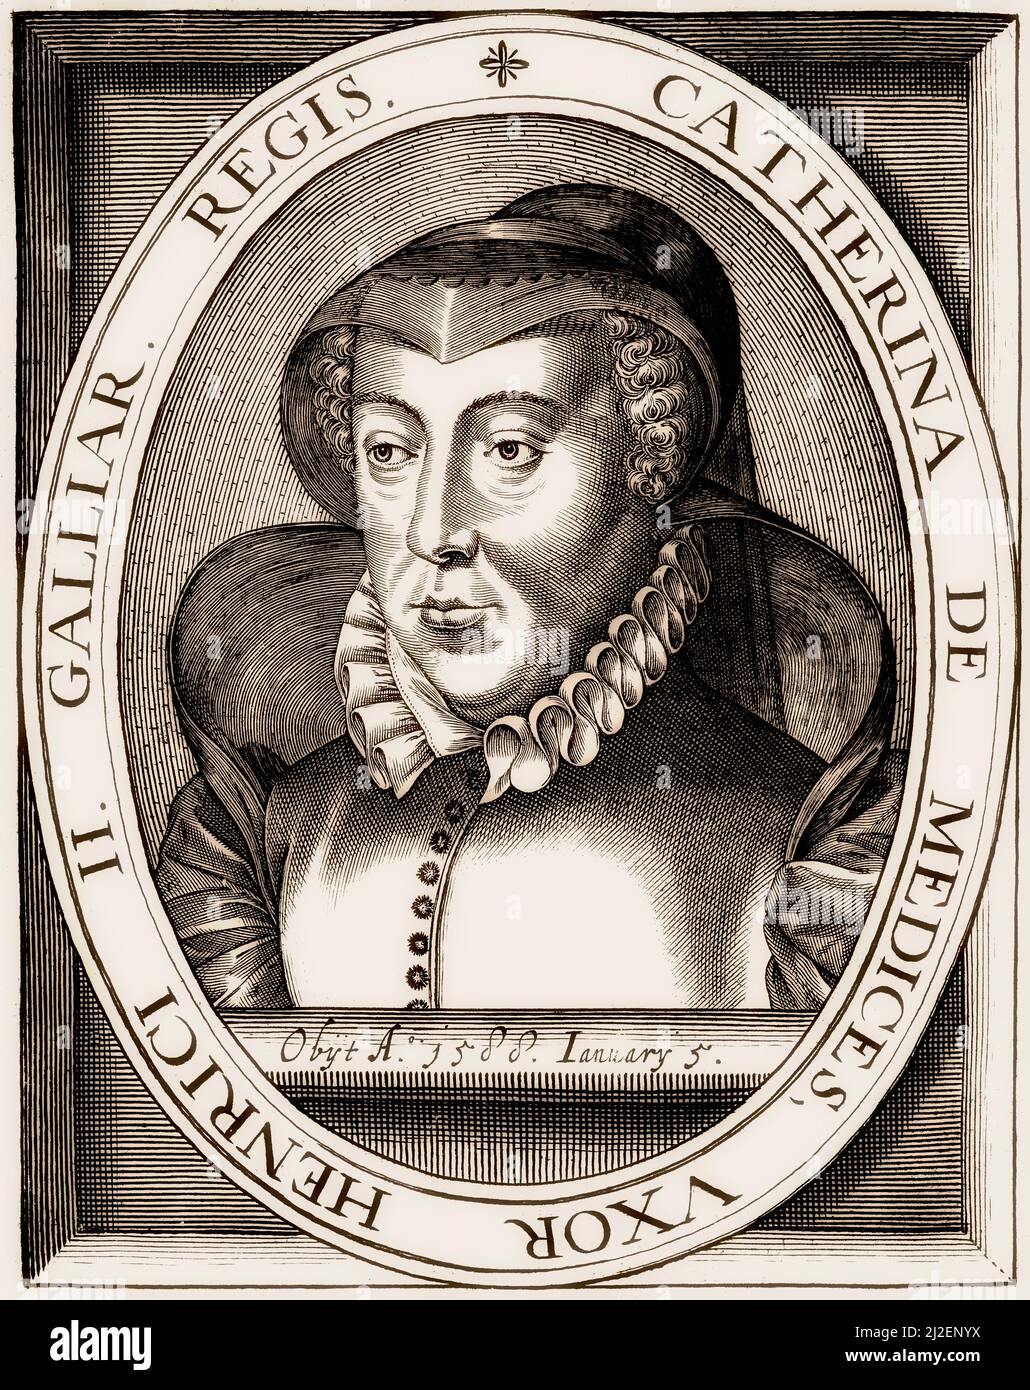 Caterina de' Medici, 1519 – 1589, nobildonna italiana, regina consorte di Francia Foto Stock